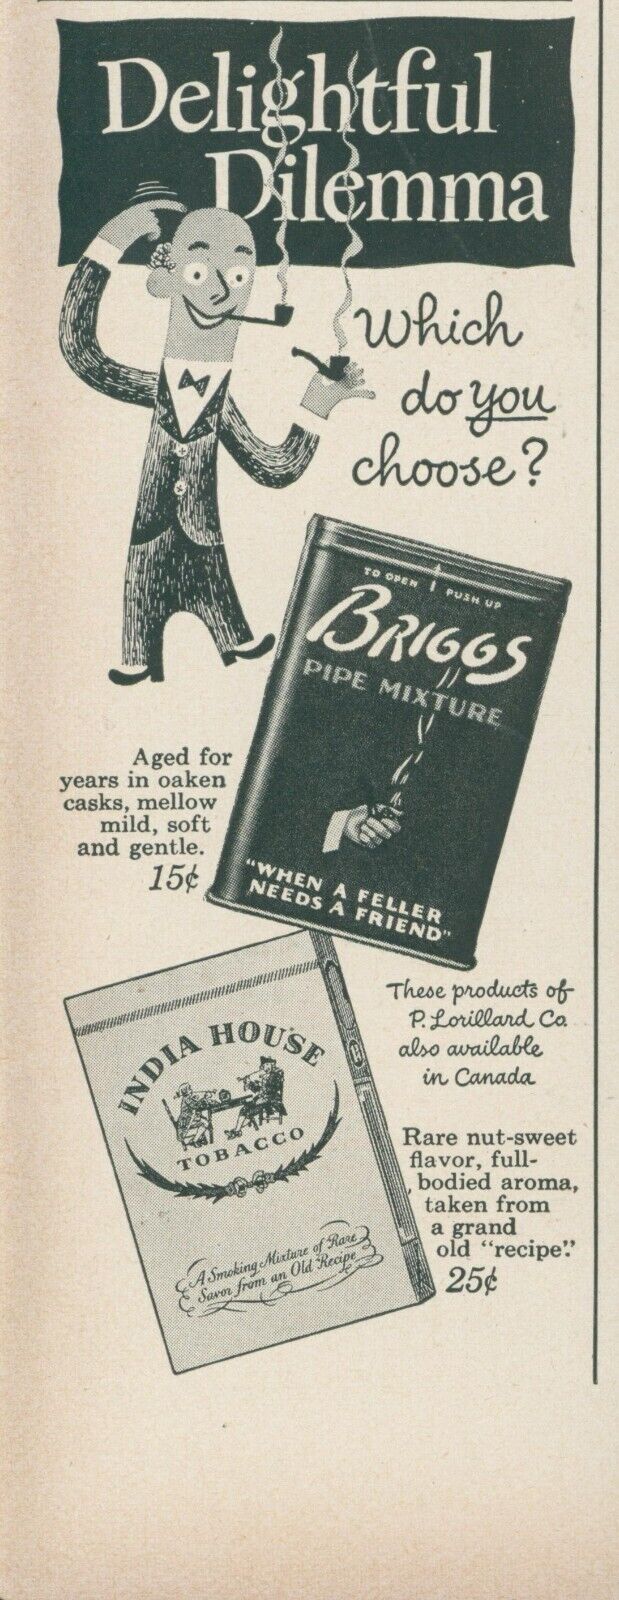 1948 Briggs Pipe Mixture India House Tobacco Delightful Dilemma Vtg Print Ad L15